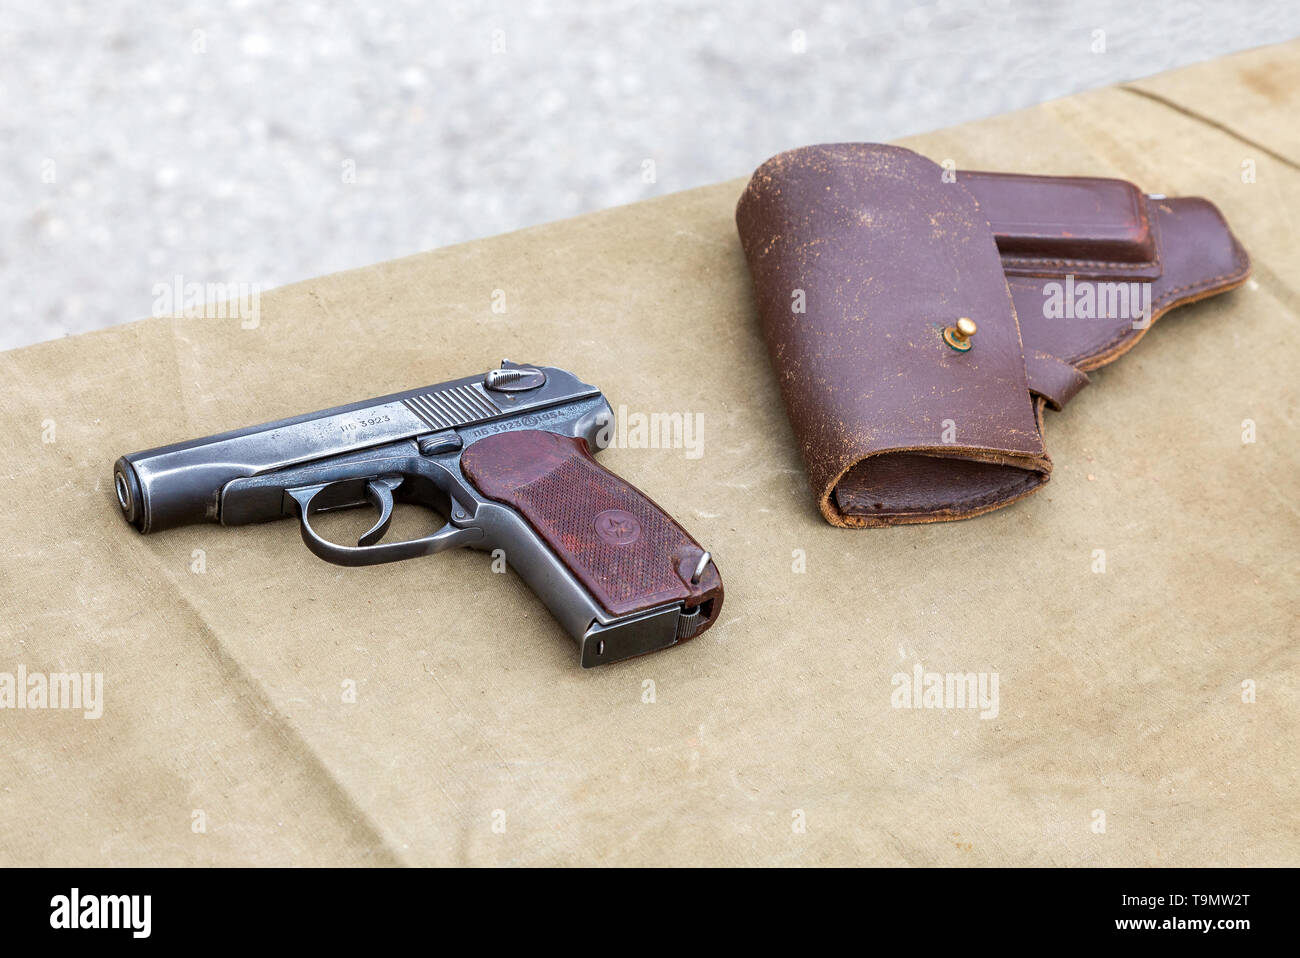 Samara, Russia - May 18, 2019: Old soviet Makarov army handgun and holster Stock Photo